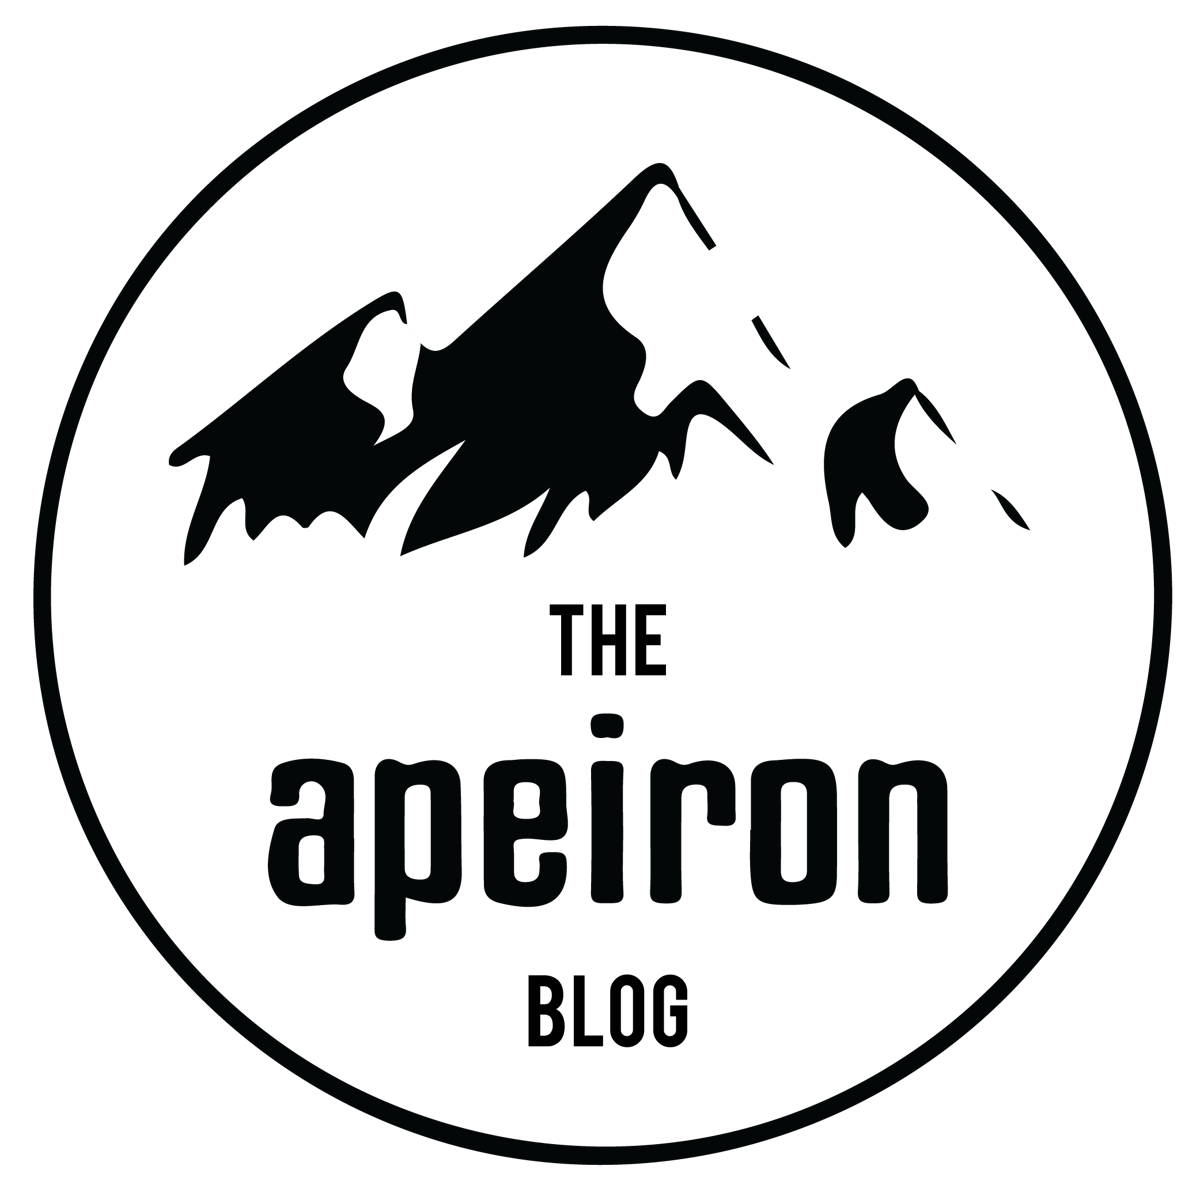 The Apeiron Blog.